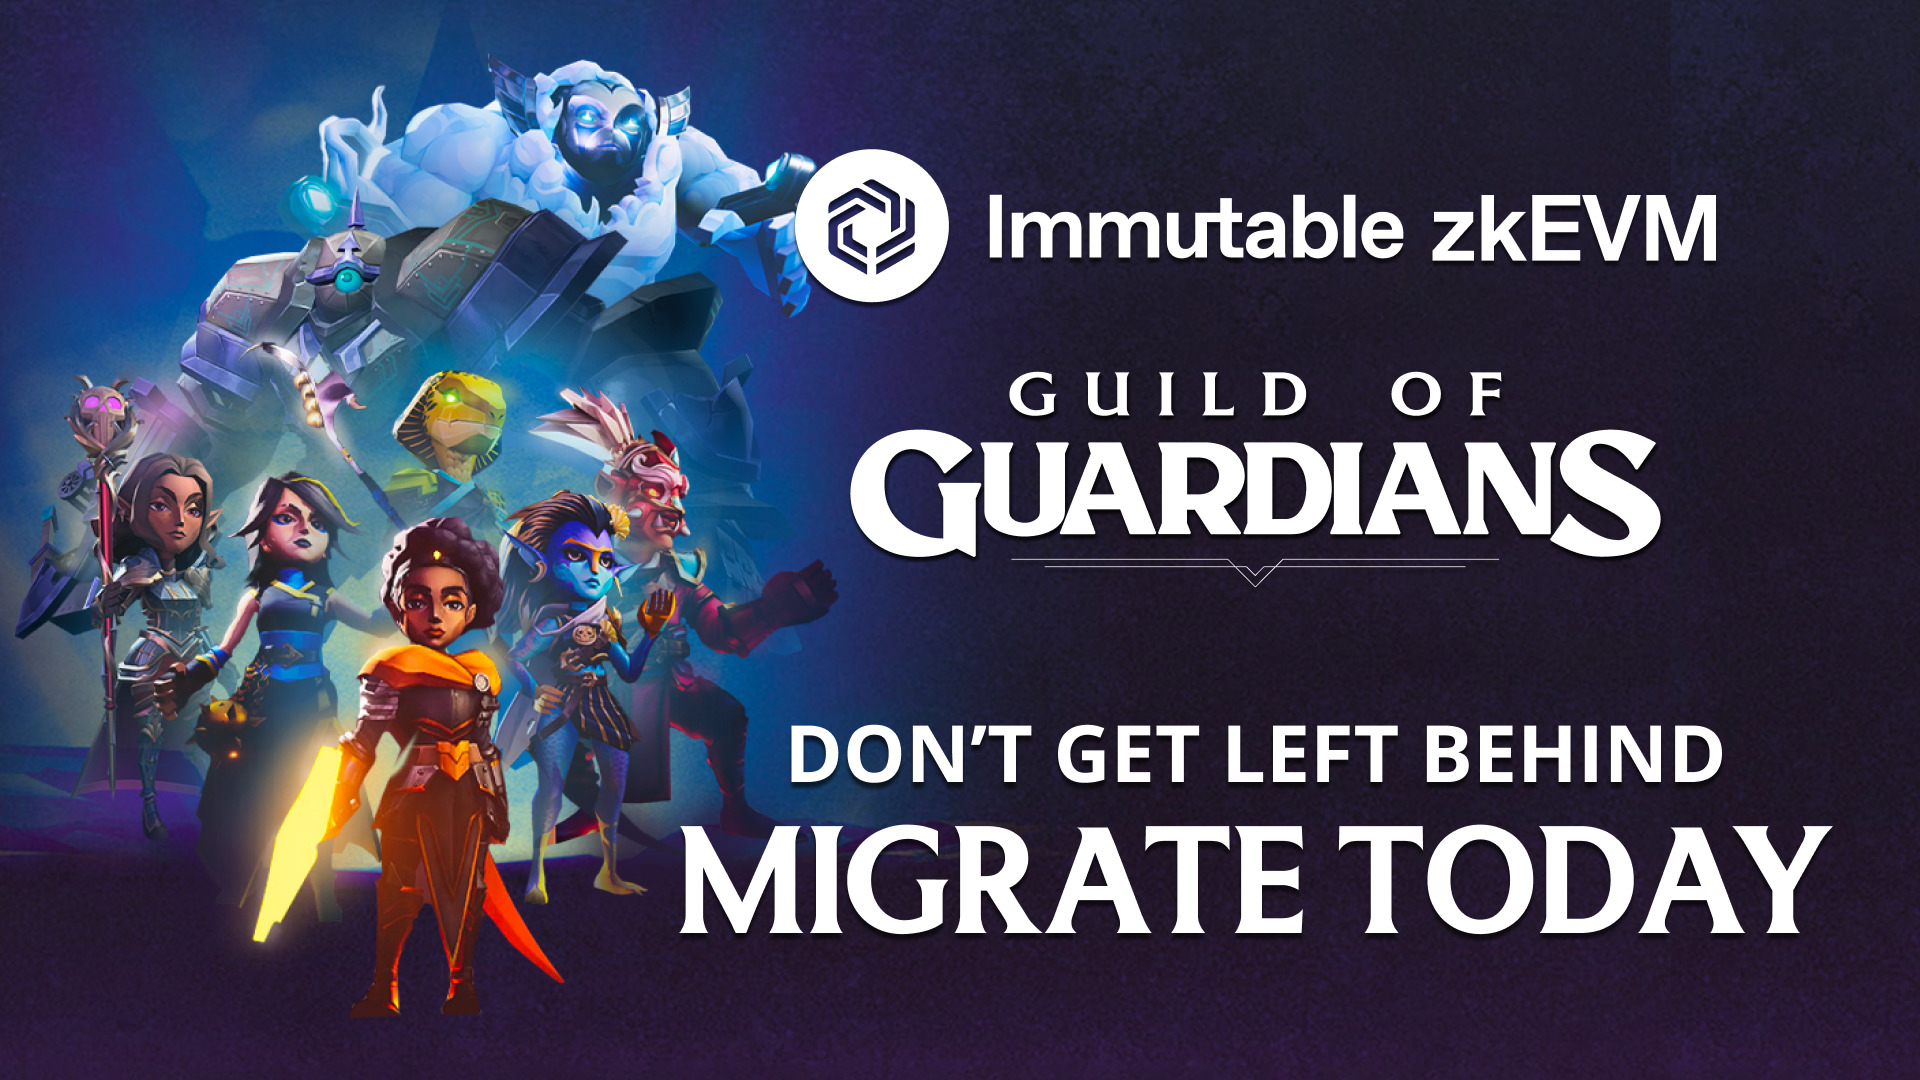 Guild of Guardians Migrating to Immutable zkEVM